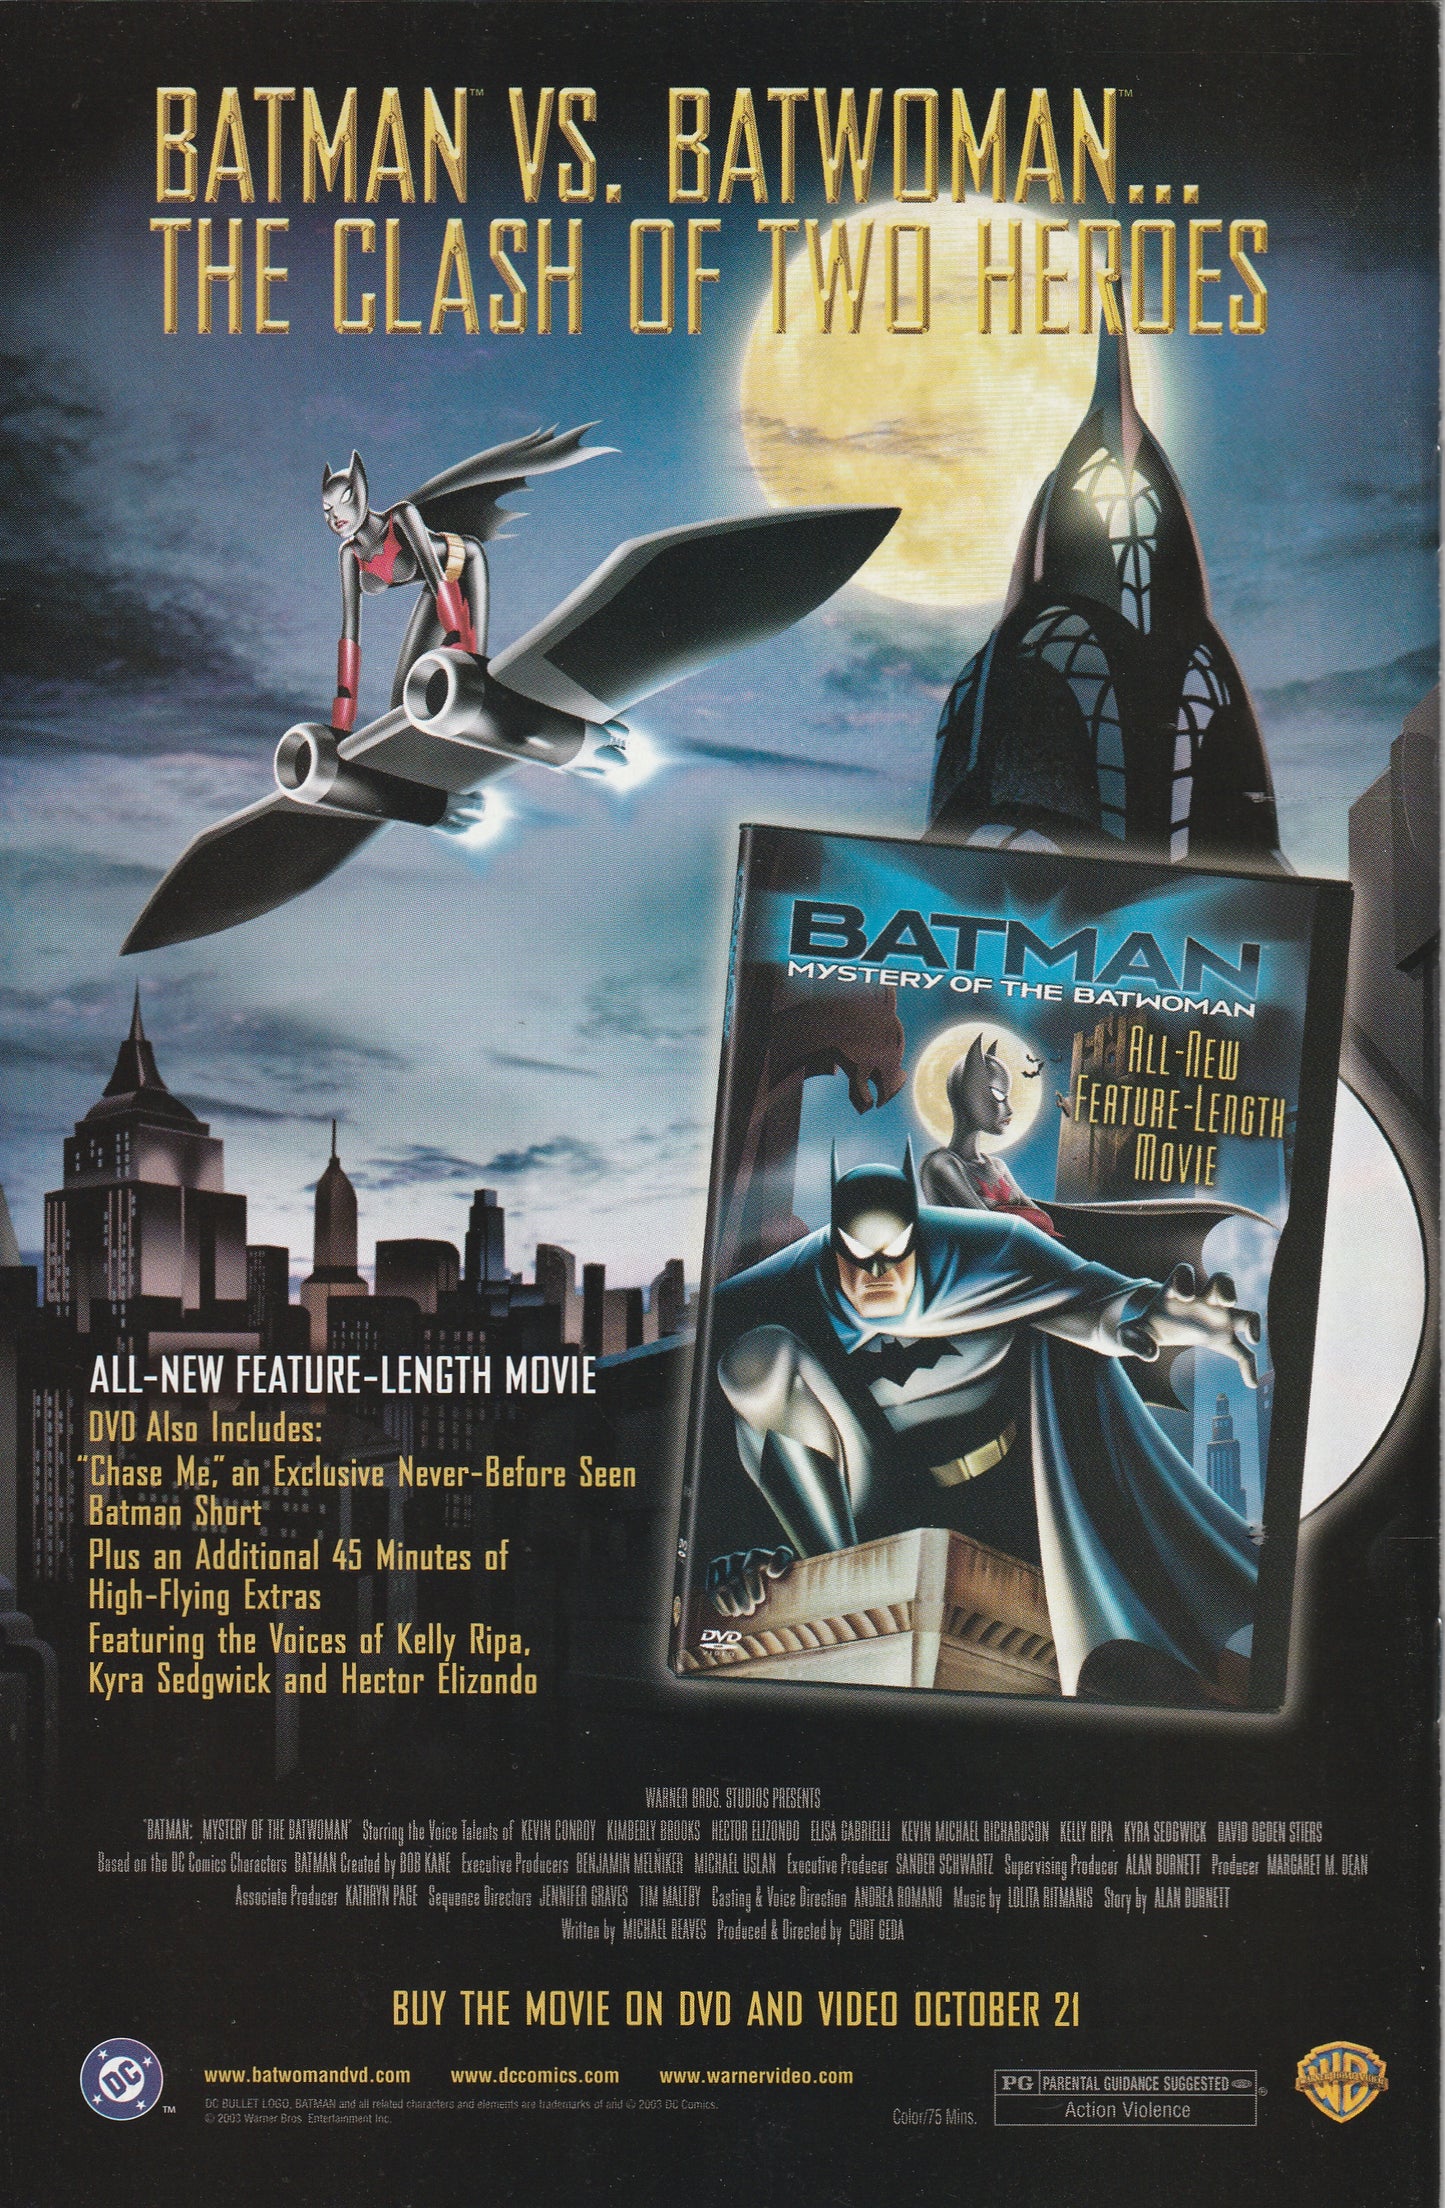 Batman #620 (2004) - Brian Azarello writing begins